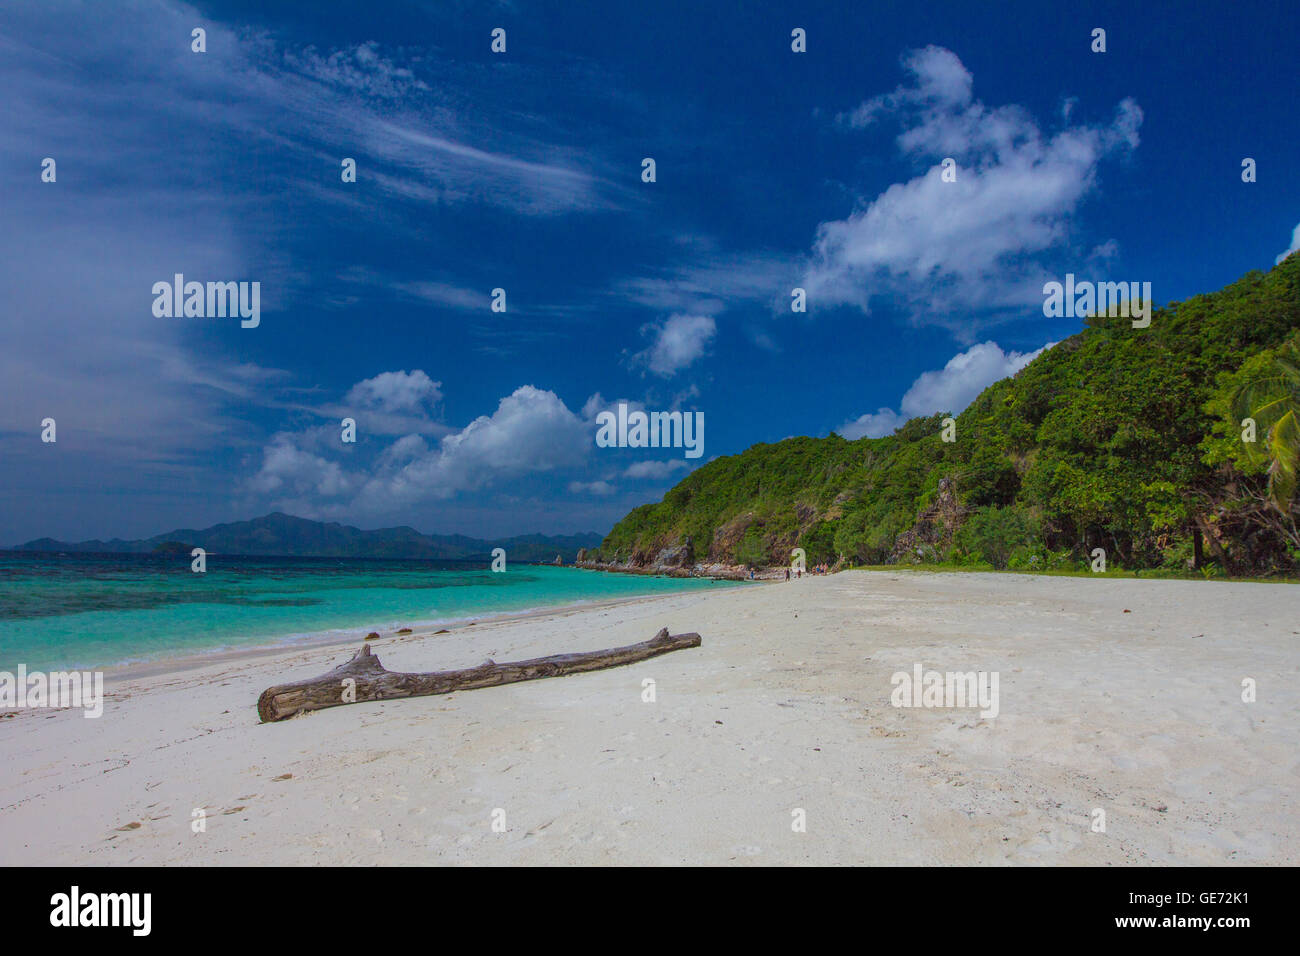 Beach in Palawan Island Philippines Stock Photo